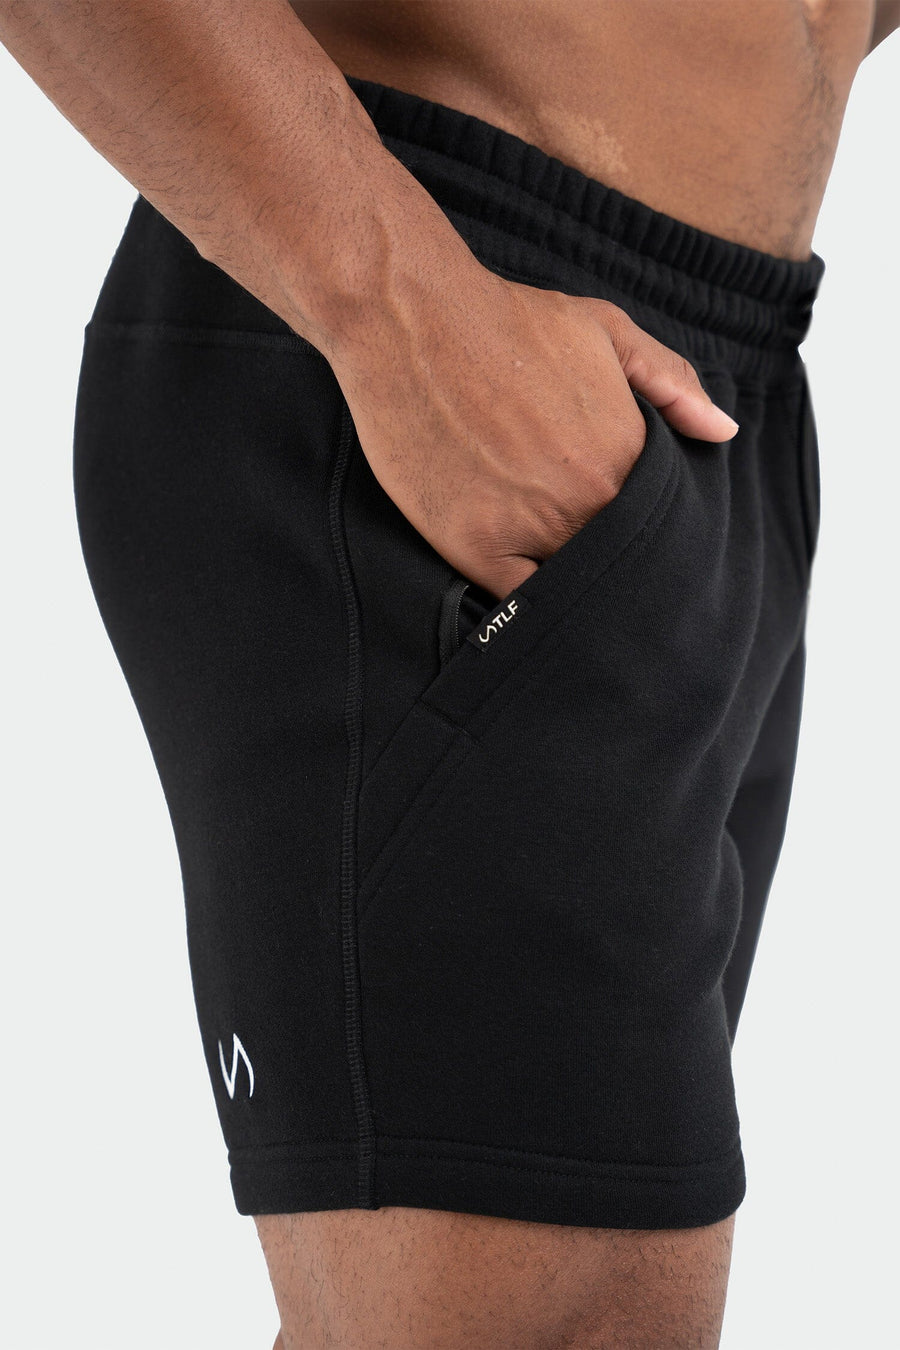 TLF Pivotal 6" Fleece Shorts – Men’s Gym Shorts - 6 Inch Inseam Men's Shorts - Black - 2